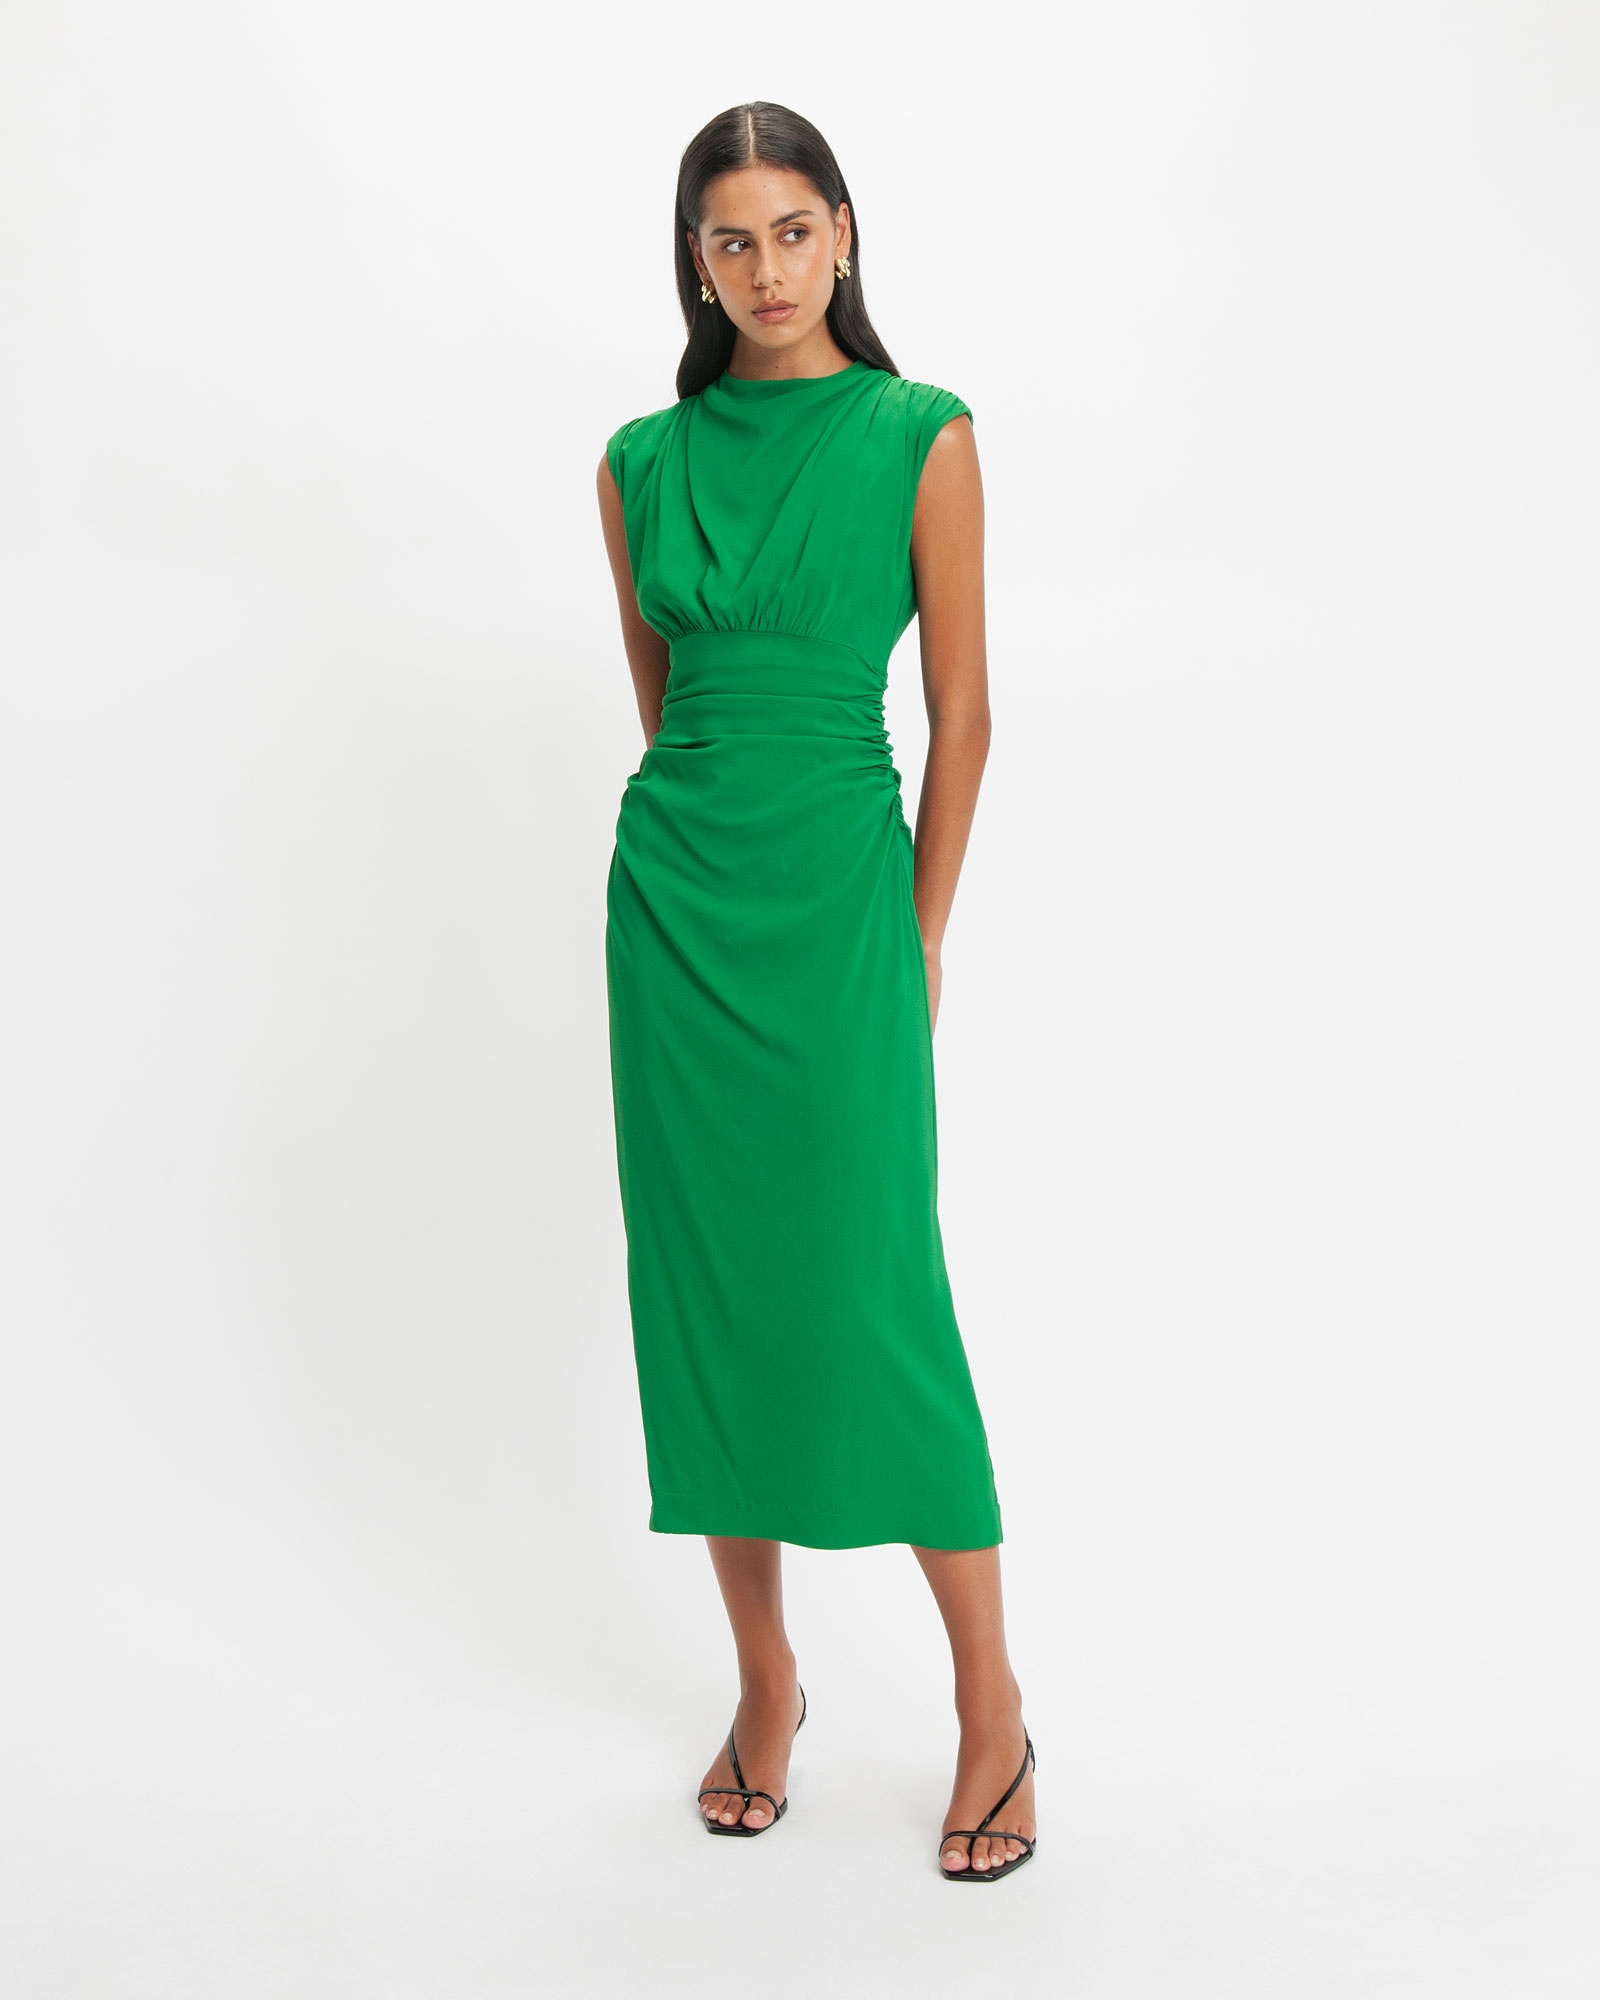 Dresses | Ruched Bodice Pencil Dress | 374 Vivid Green